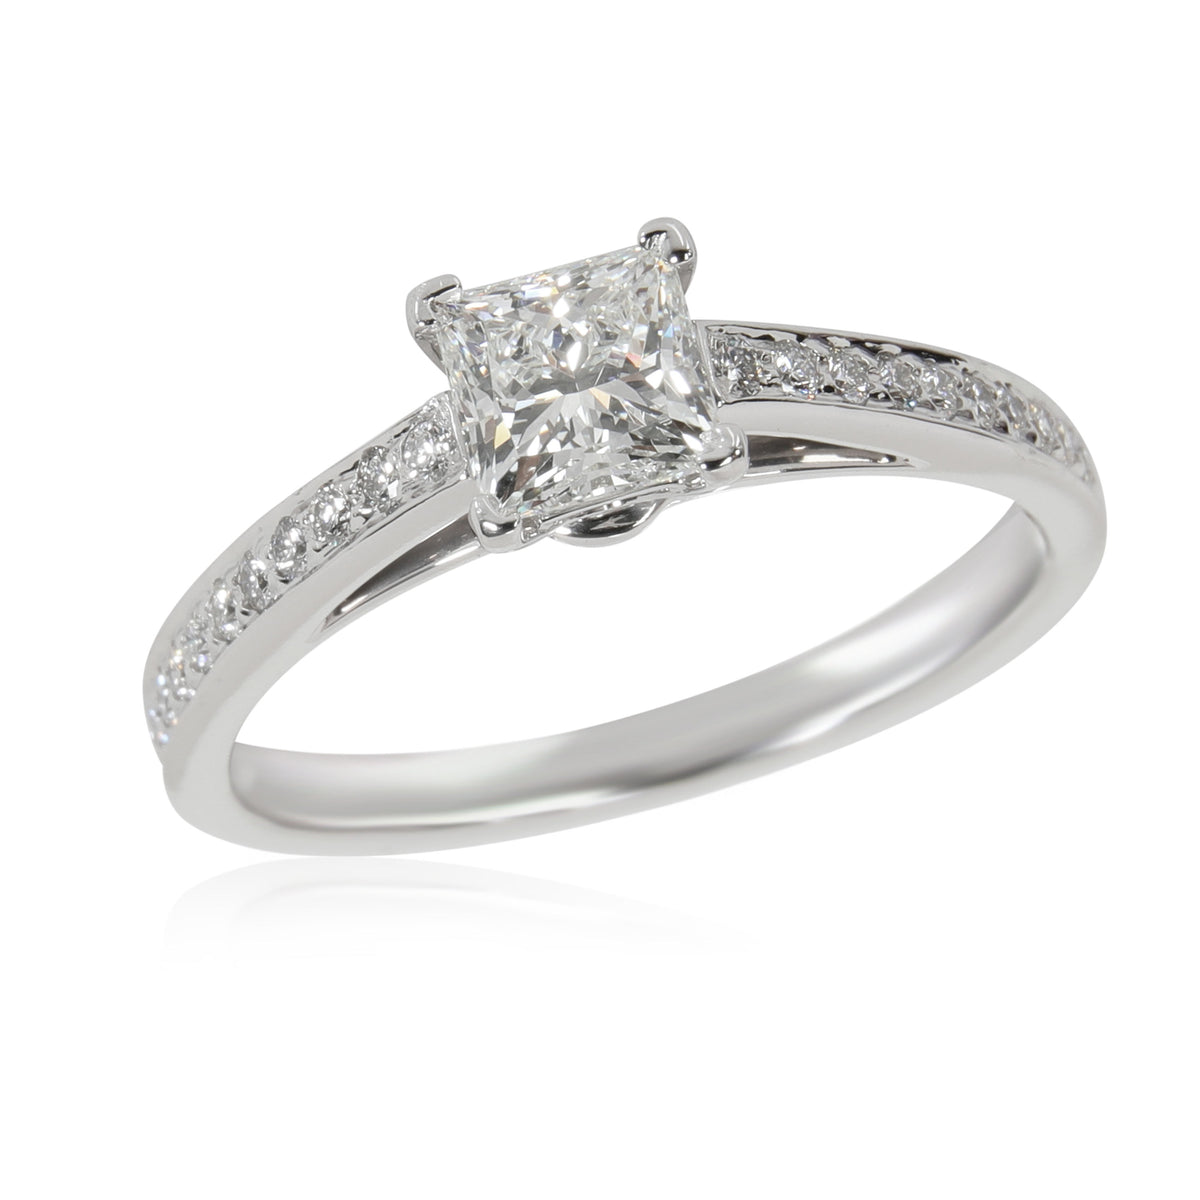 Tiffany & Co. Grace Diamond Engagement Ring in Platinum H VVS1 0.76 Ctw